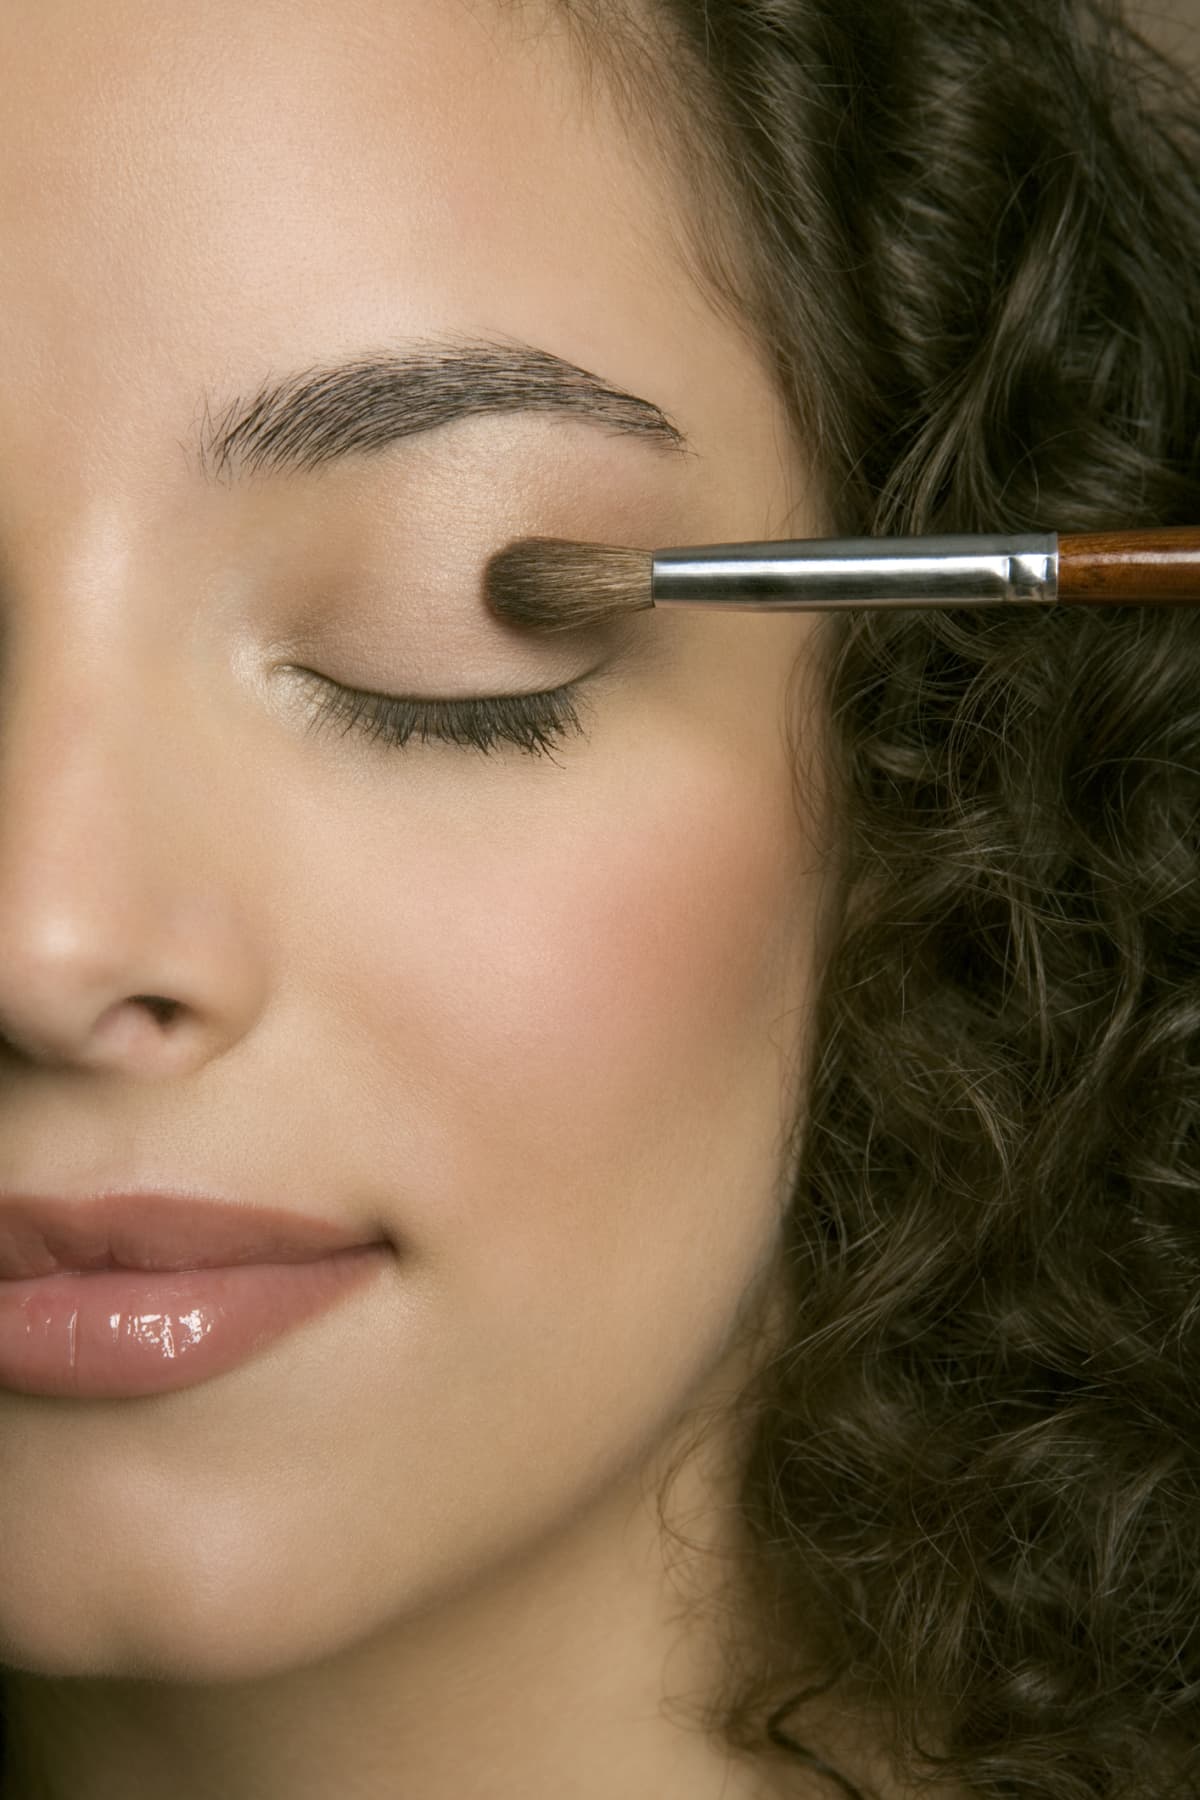 Young woman applying eyeshadow, eyes closed, close-up.